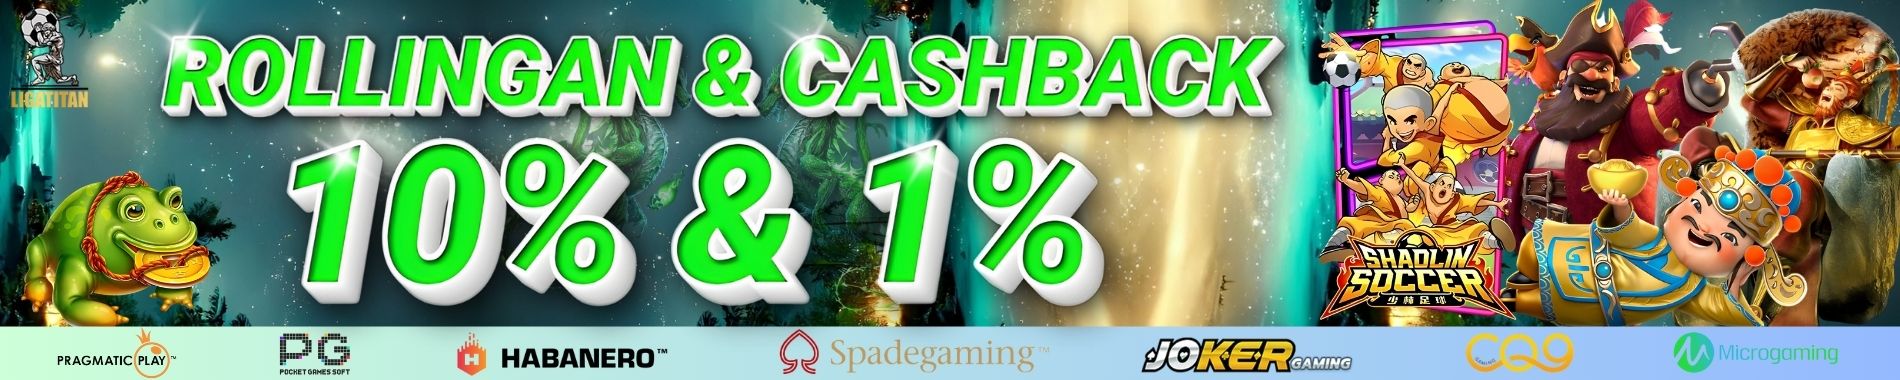 Cashback 10%   Rollingan 1%